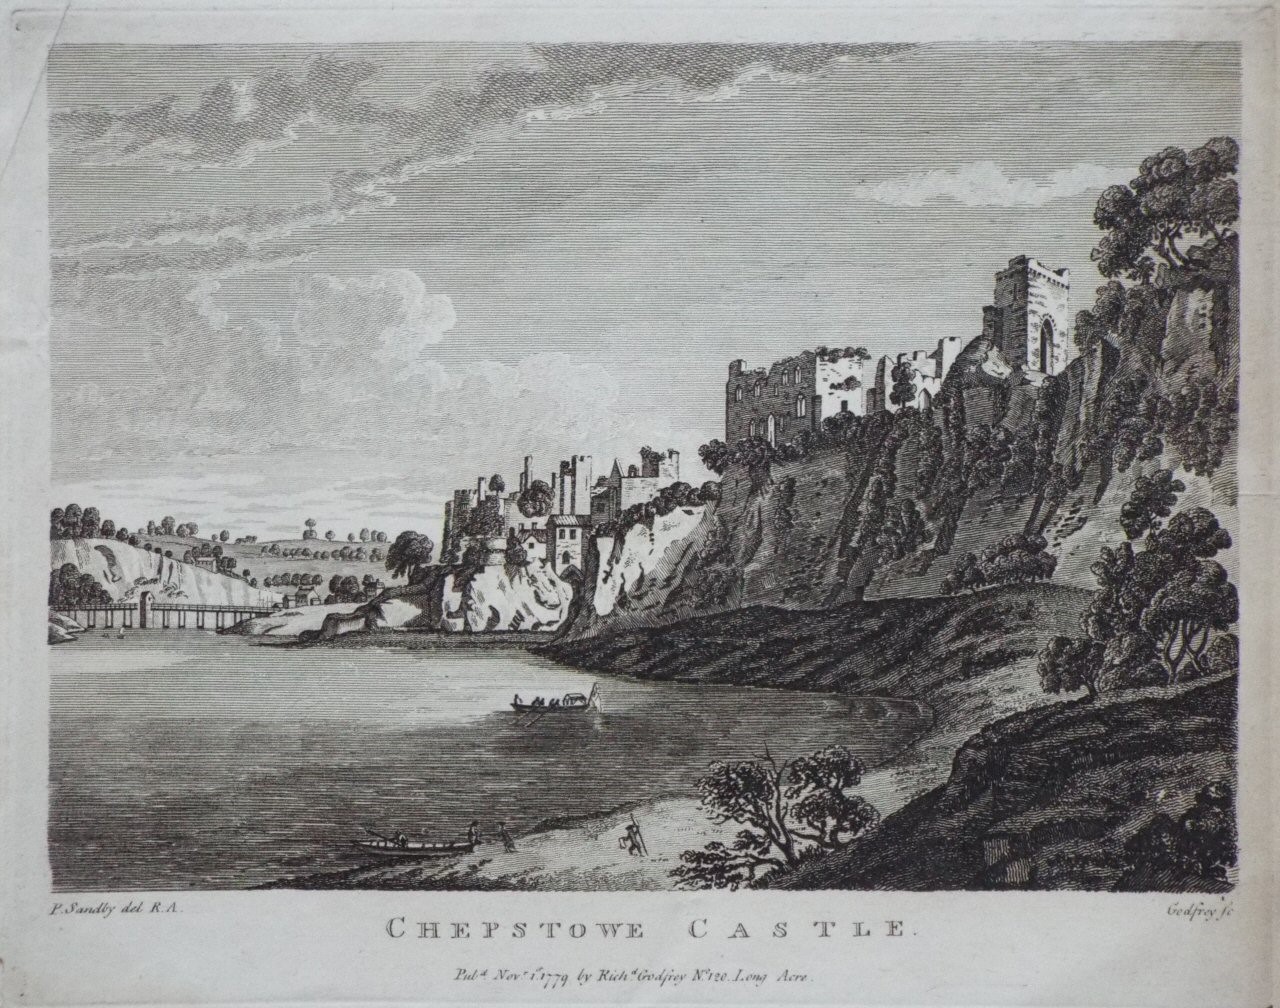 Print - Chepstowe Castle - 